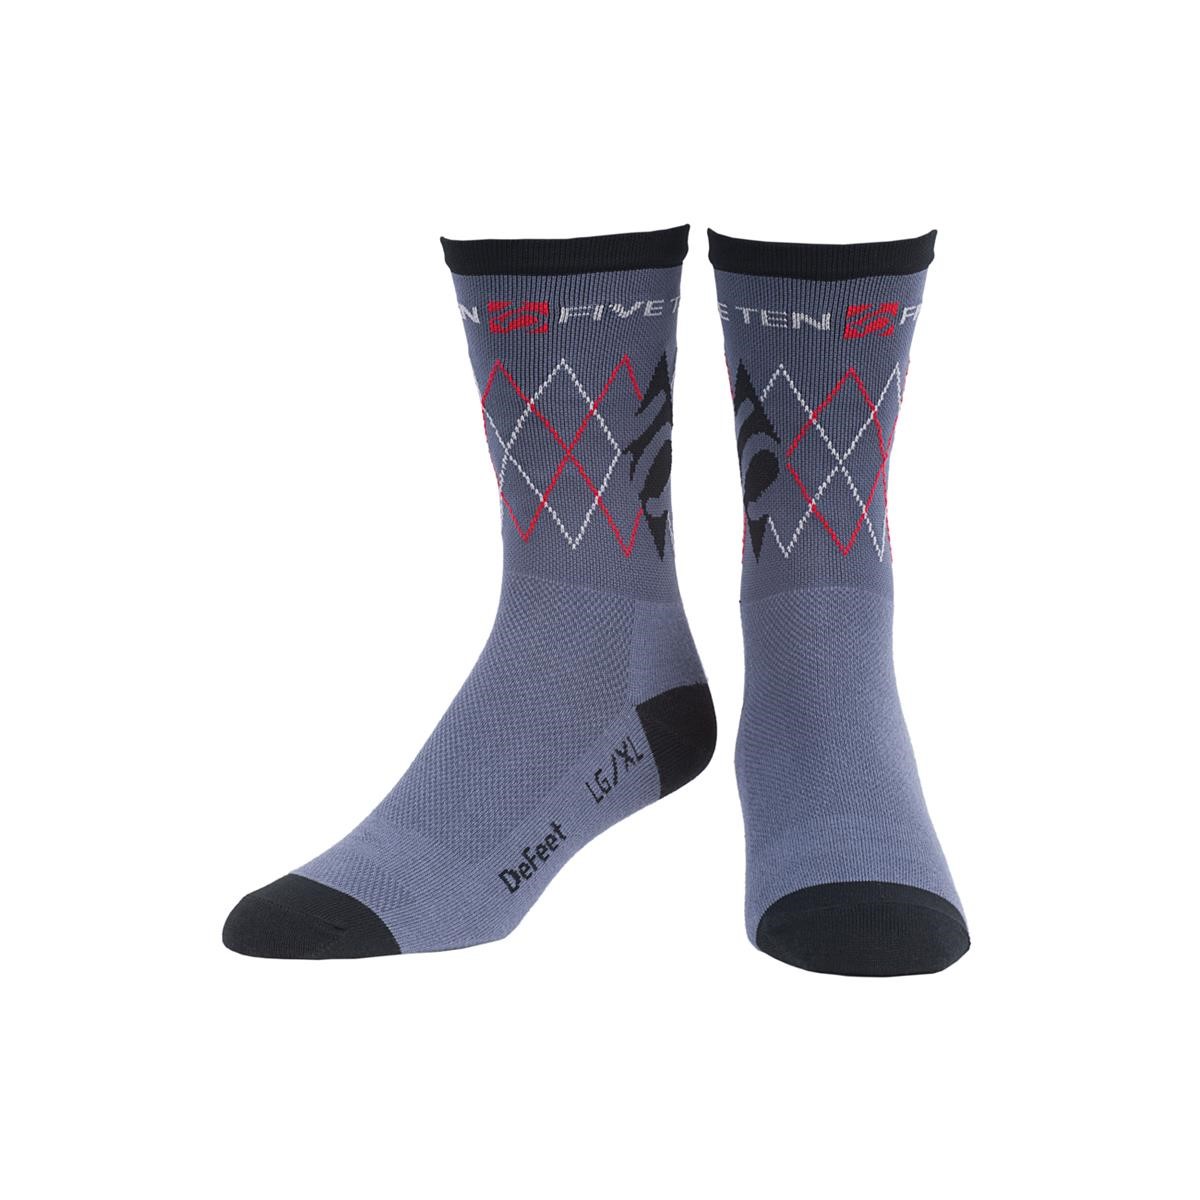 Five Ten Socks Argyle Grey/Black